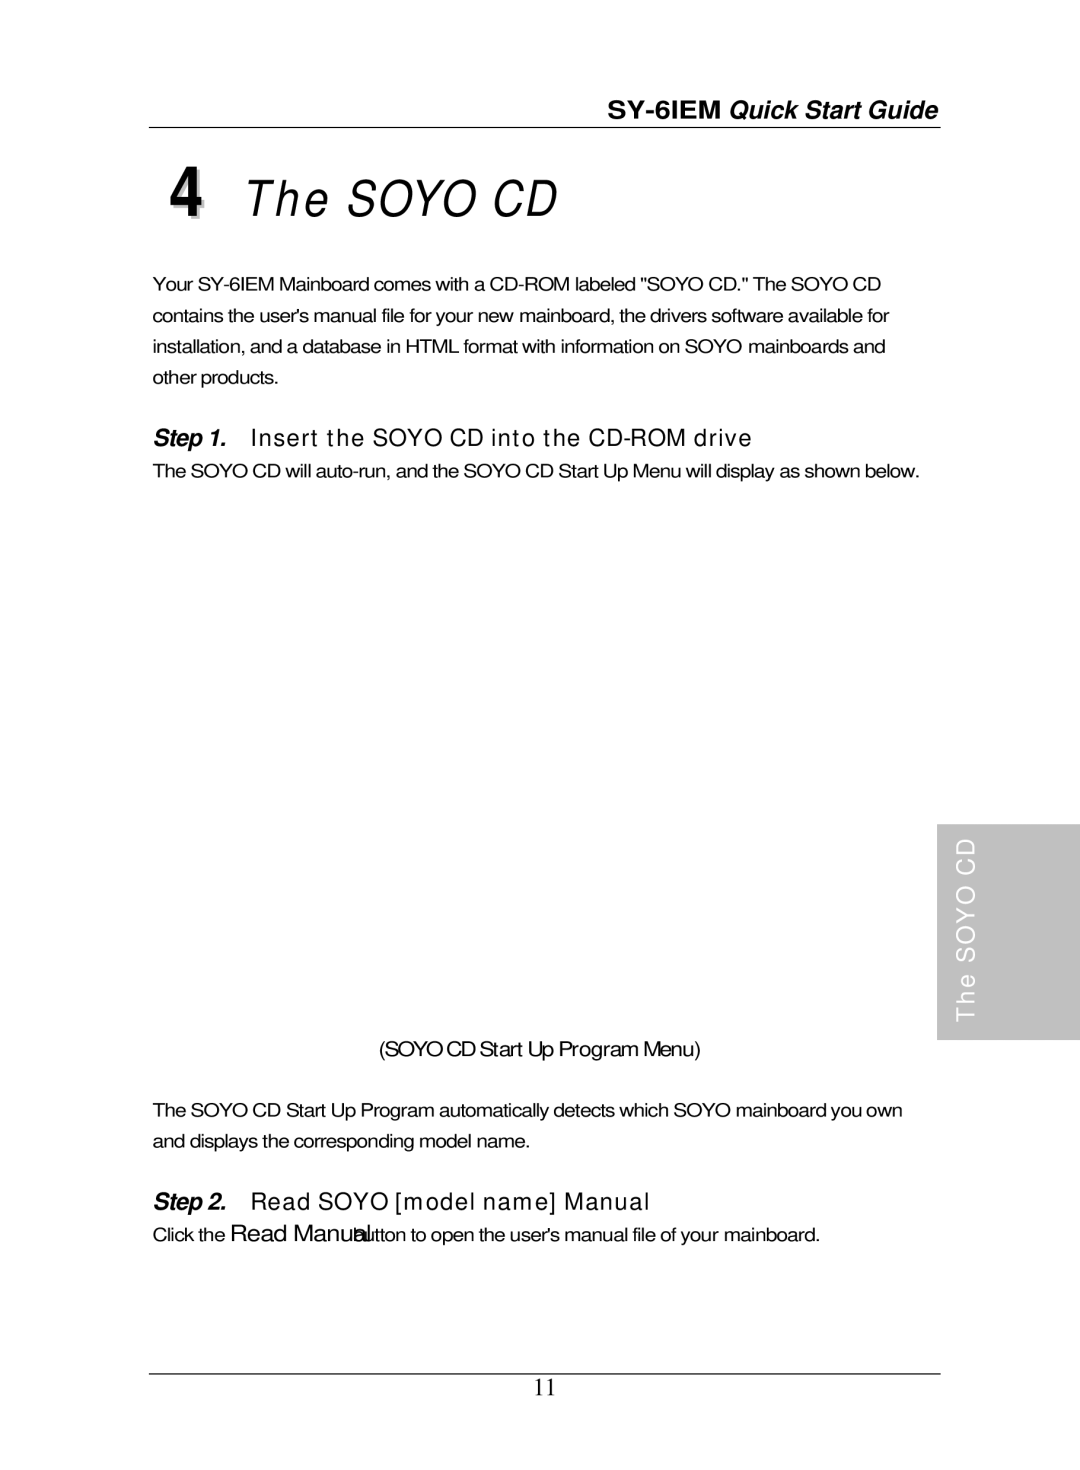 SOYO SY-6IEM quick start Insert the Soyo CD into the CD-ROM drive, Read Soyo model name Manual 